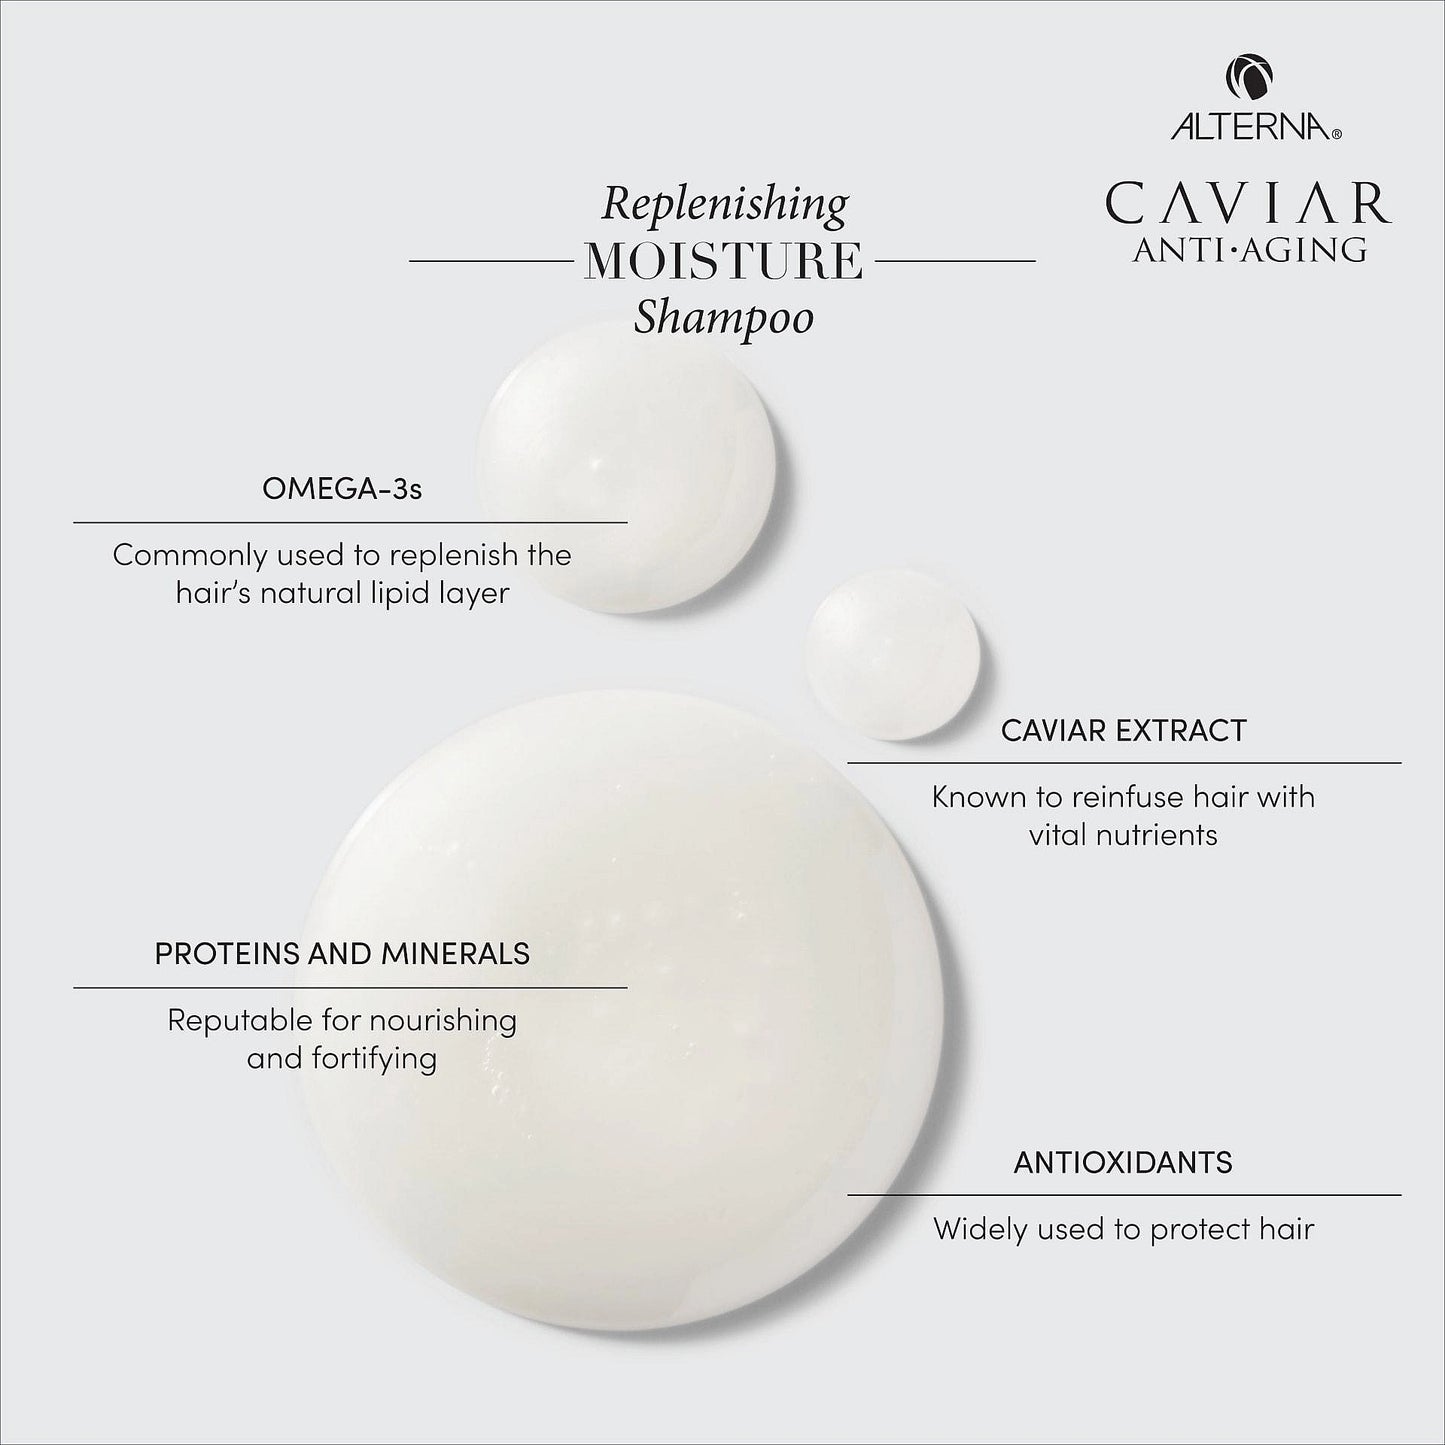 CAVIAR Anti-Aging Replenishing Moisture Shampoo